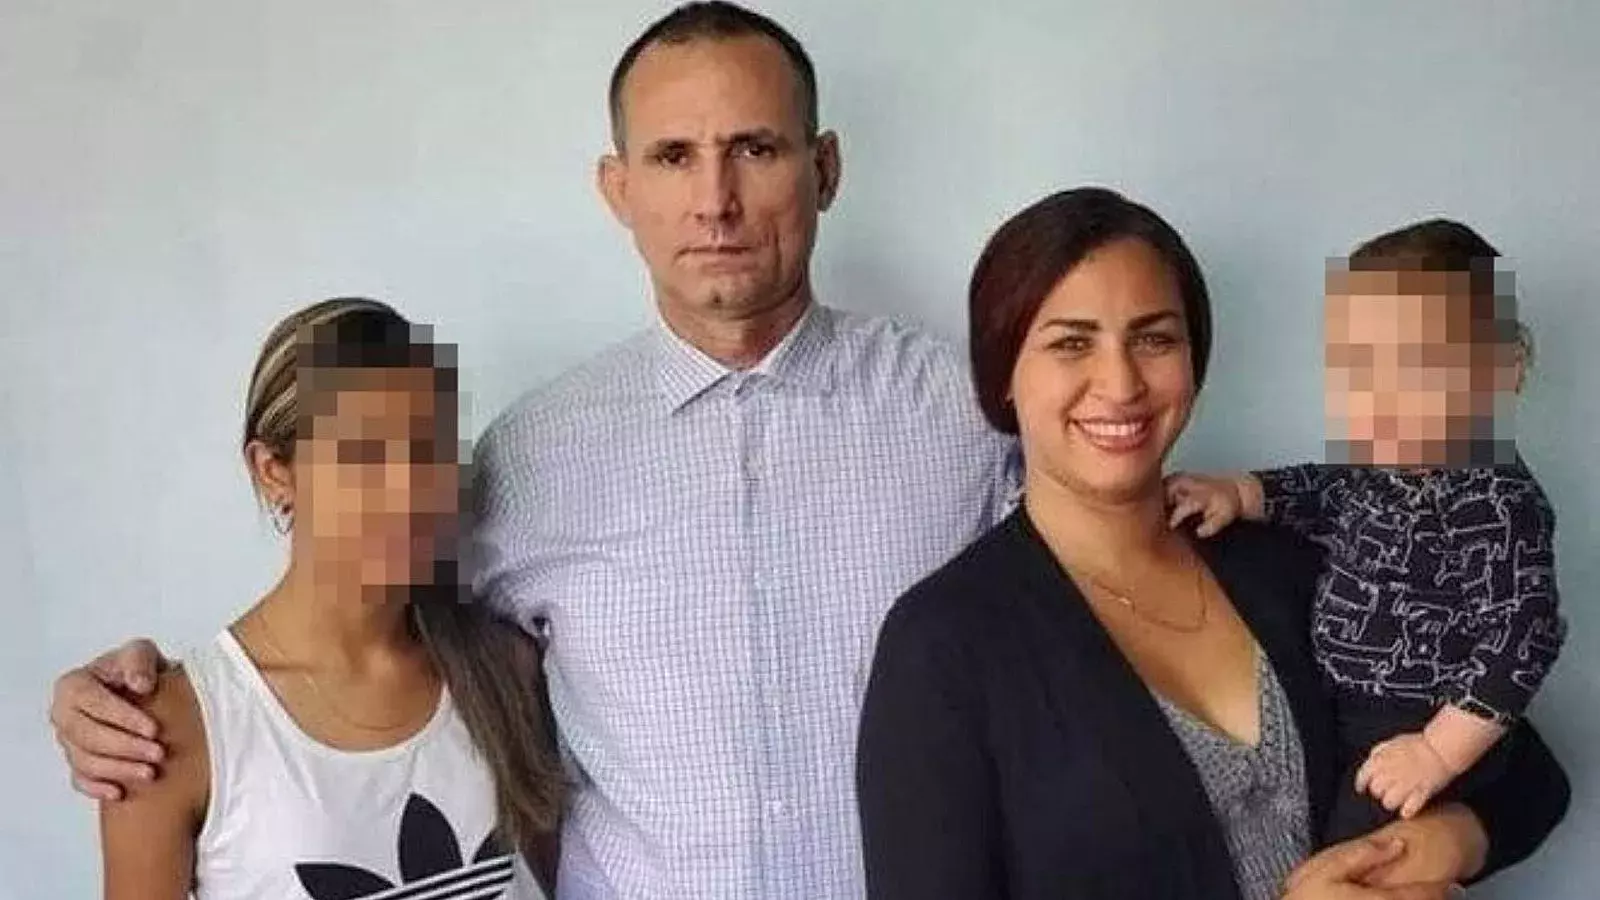 Opositor cubano José Daniel Ferrer con su esposa e hijos